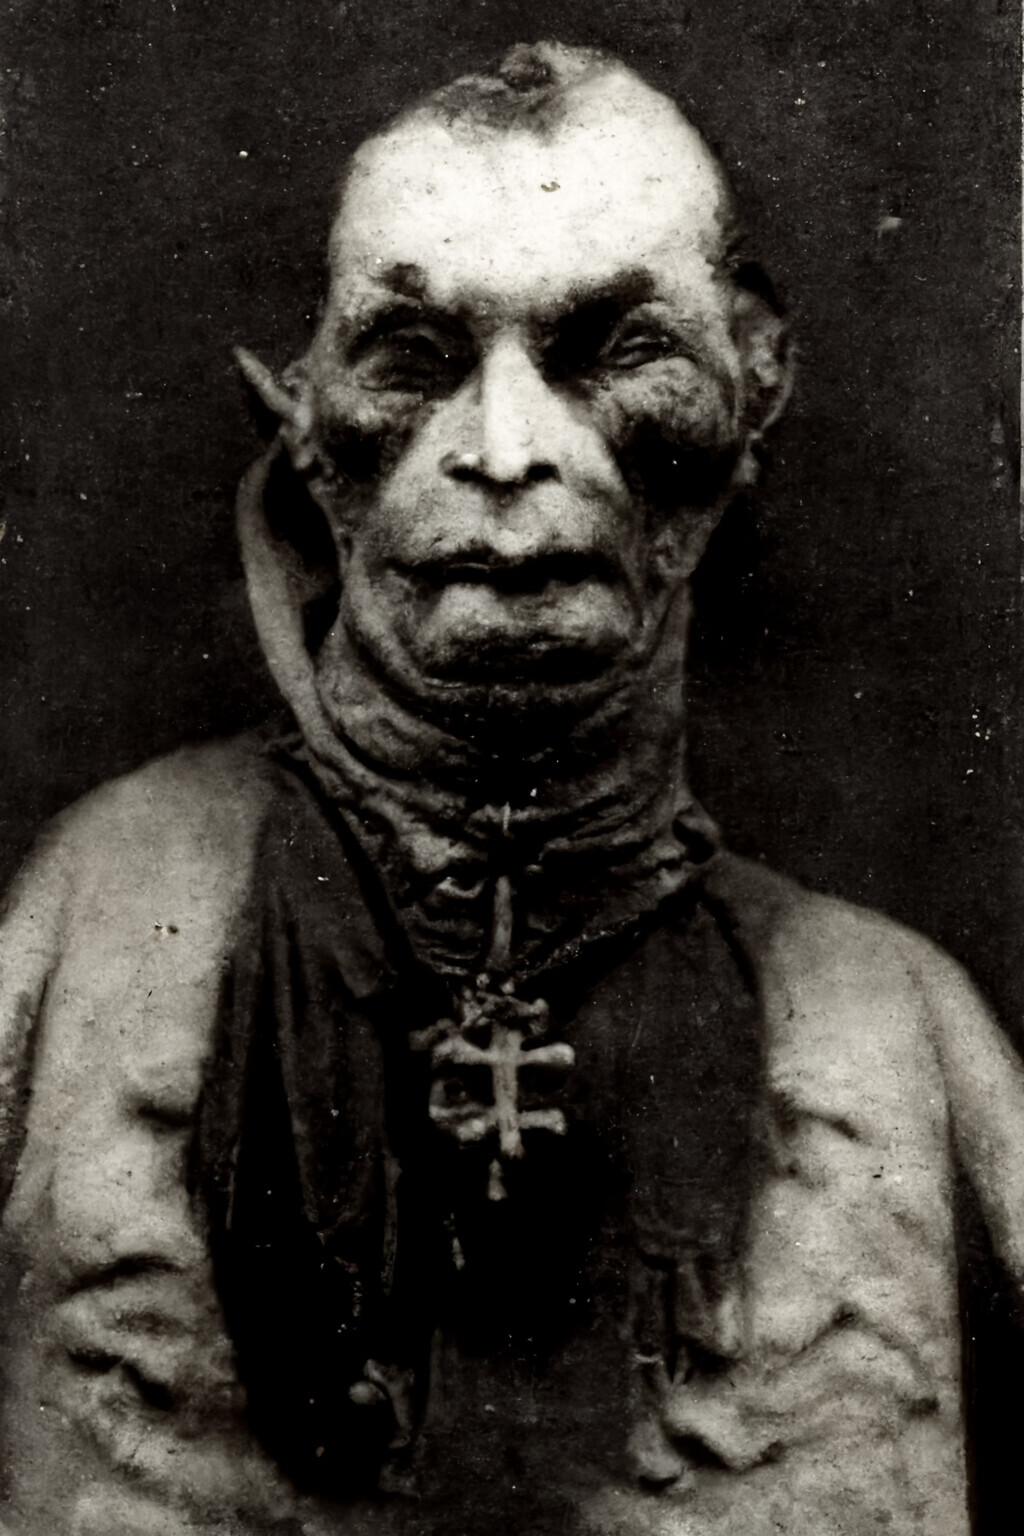 Portrait of Cristian Baciu
c. 1881
Photograph
'12 cubits and growing'